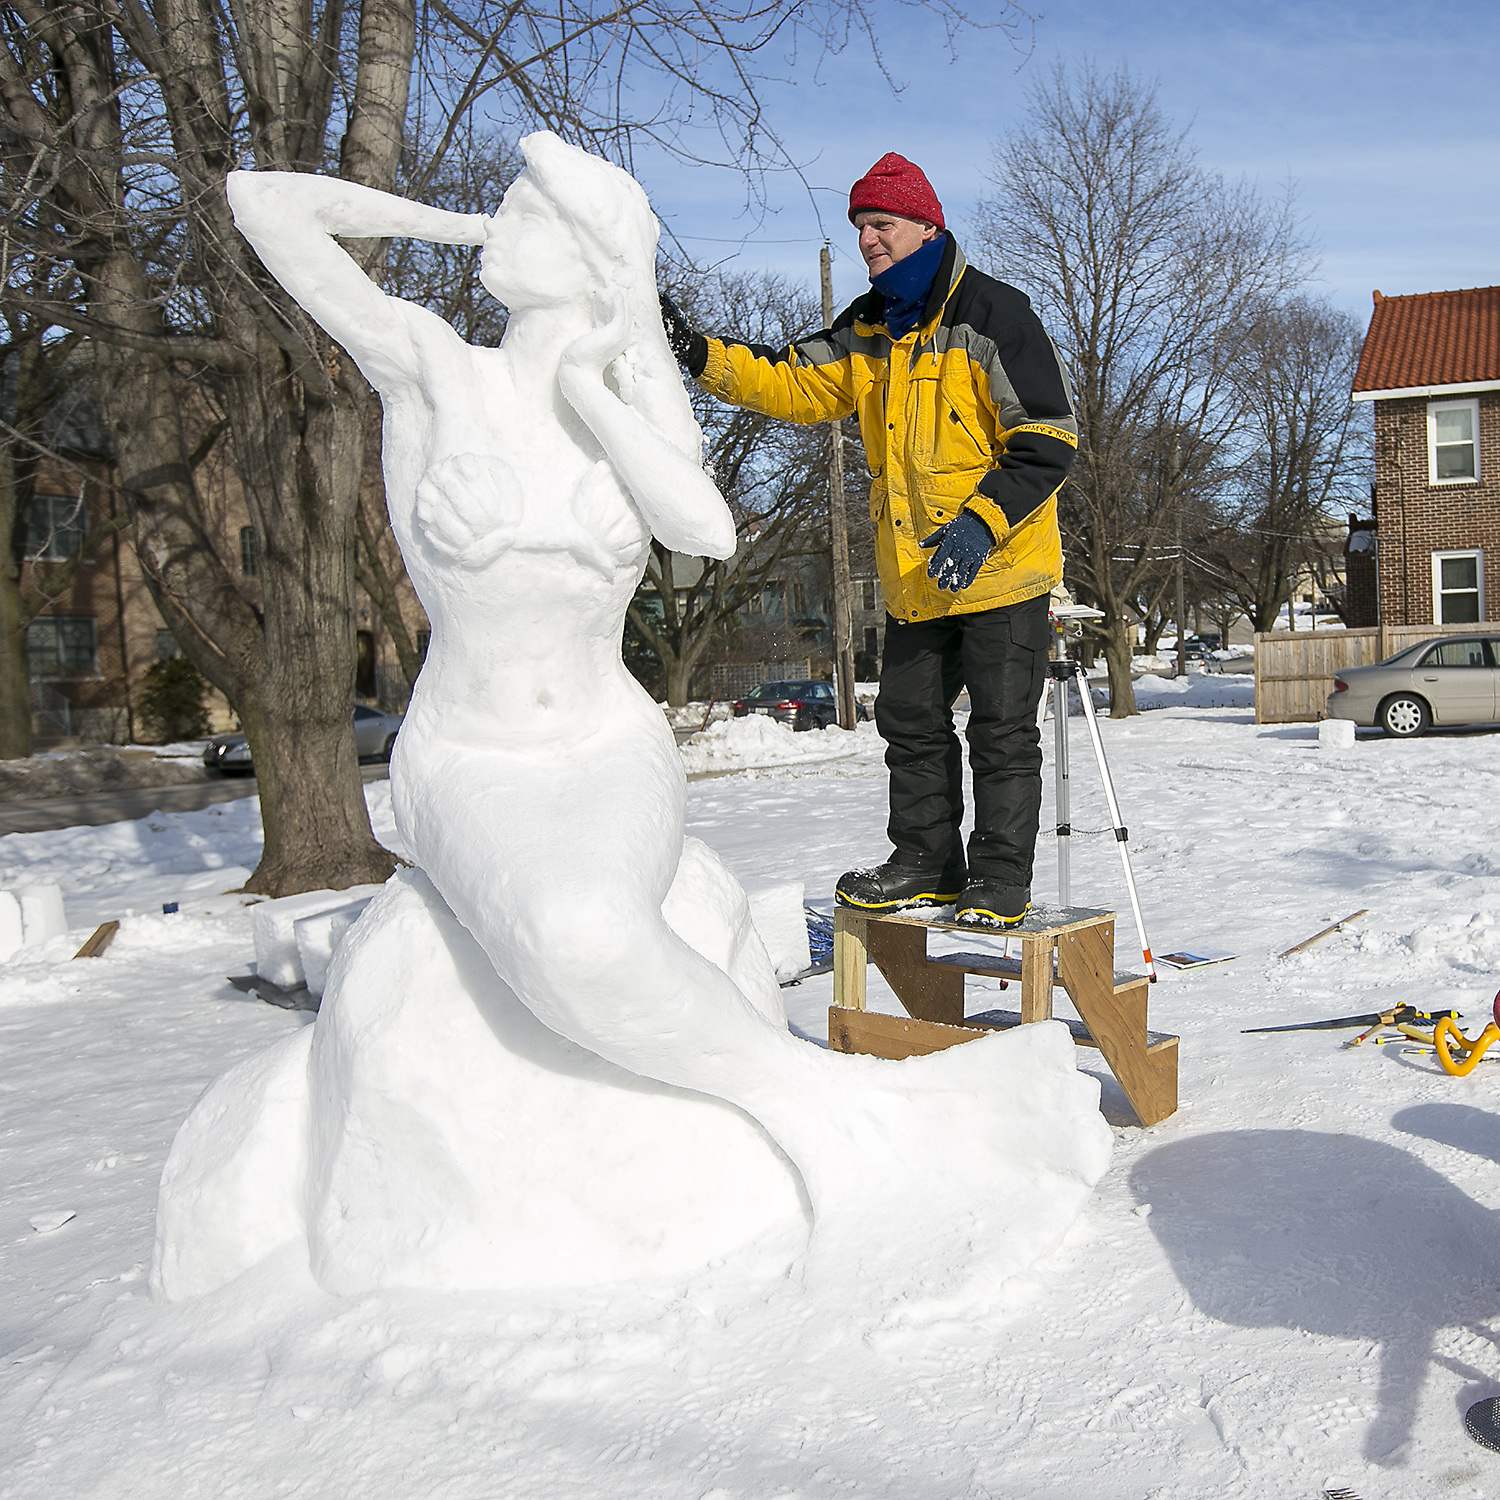 How to make an award-winning snow sculpture with Fran Volz